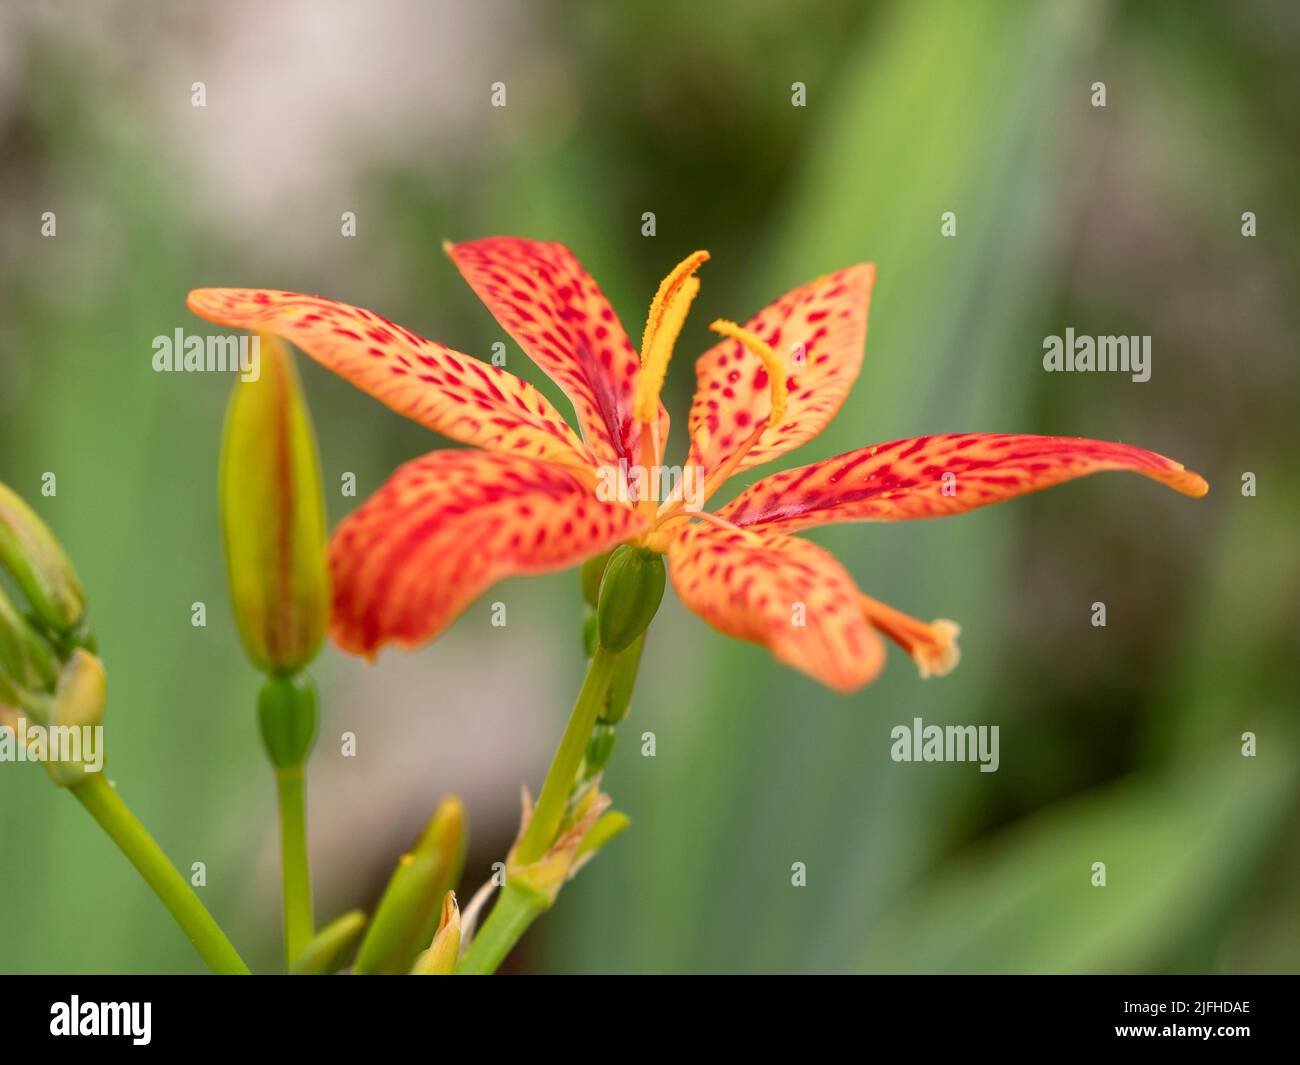 Primer plano de una encantadora flor de lirio naranja de mora Foto de stock